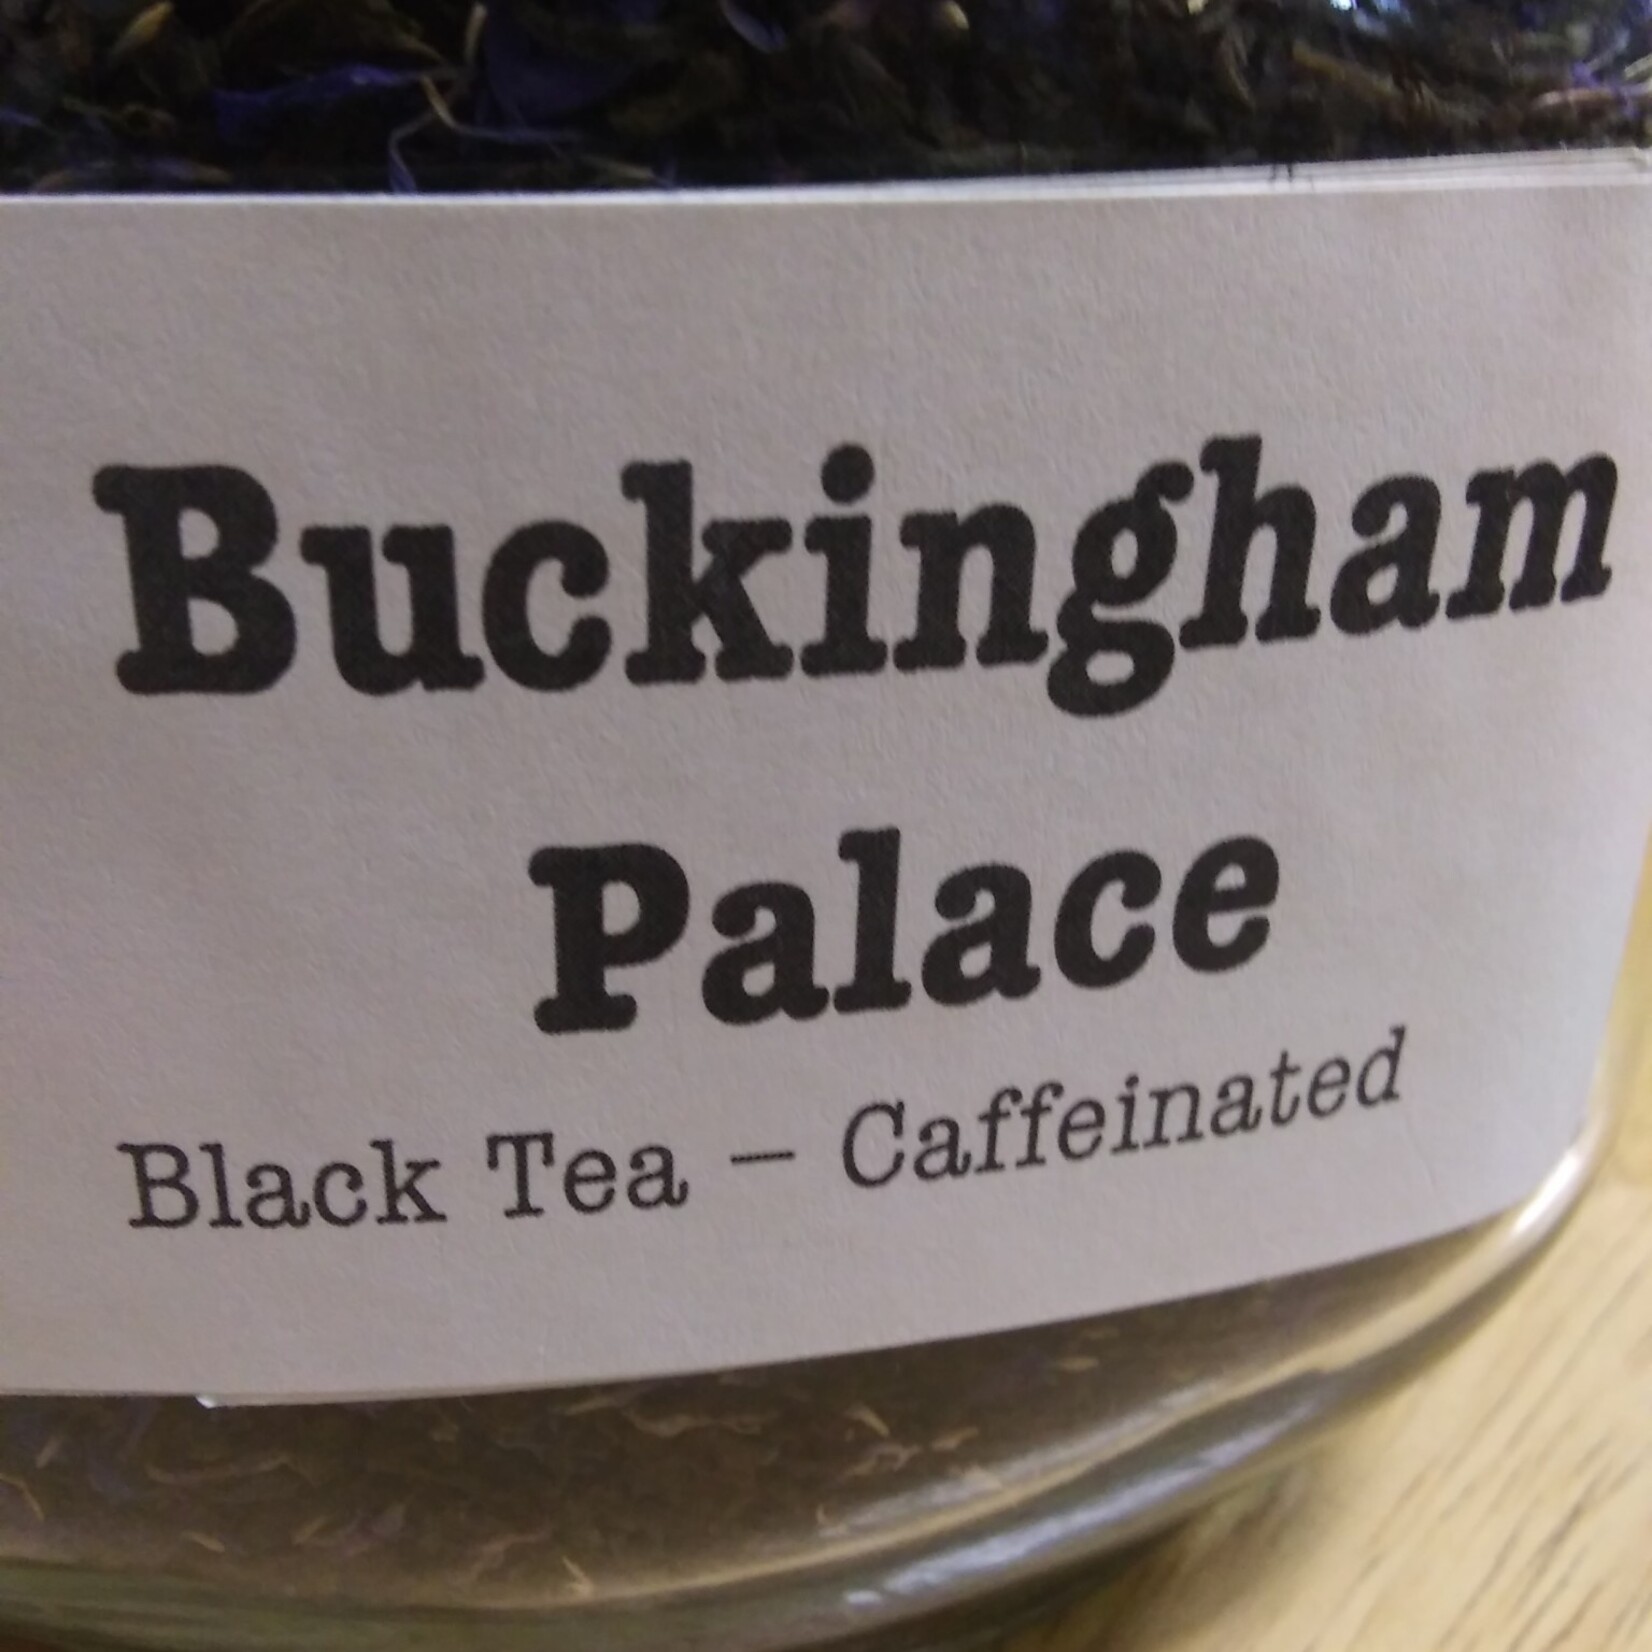 Black Tea 2 oz Package: Buckingham Palace